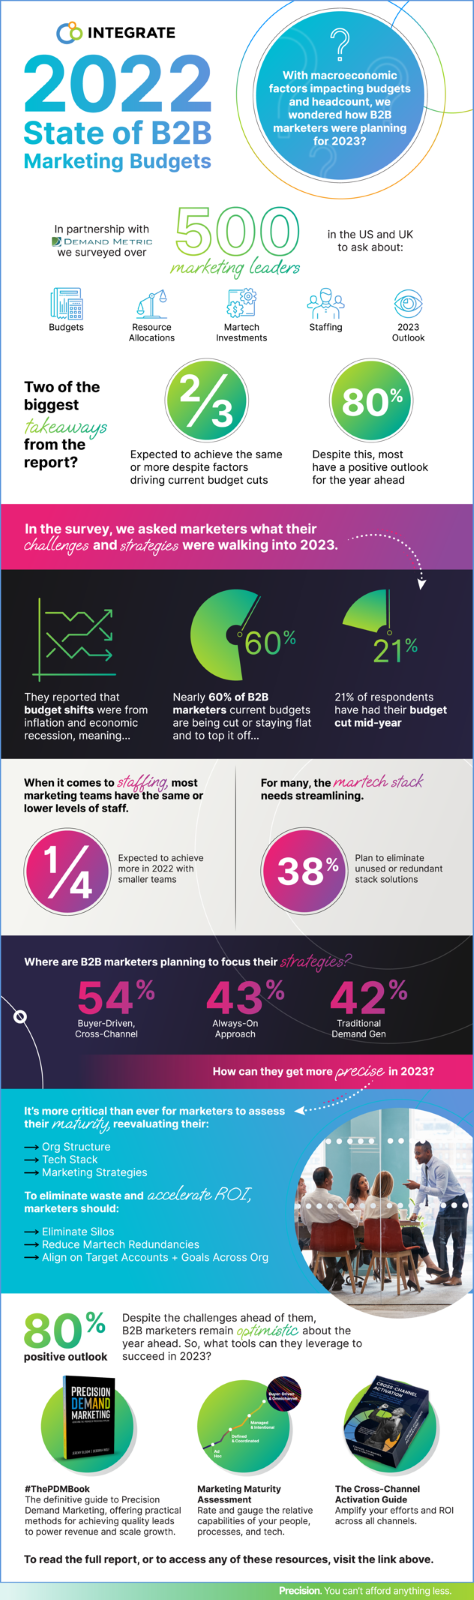 B2B marketing budget survey infographic